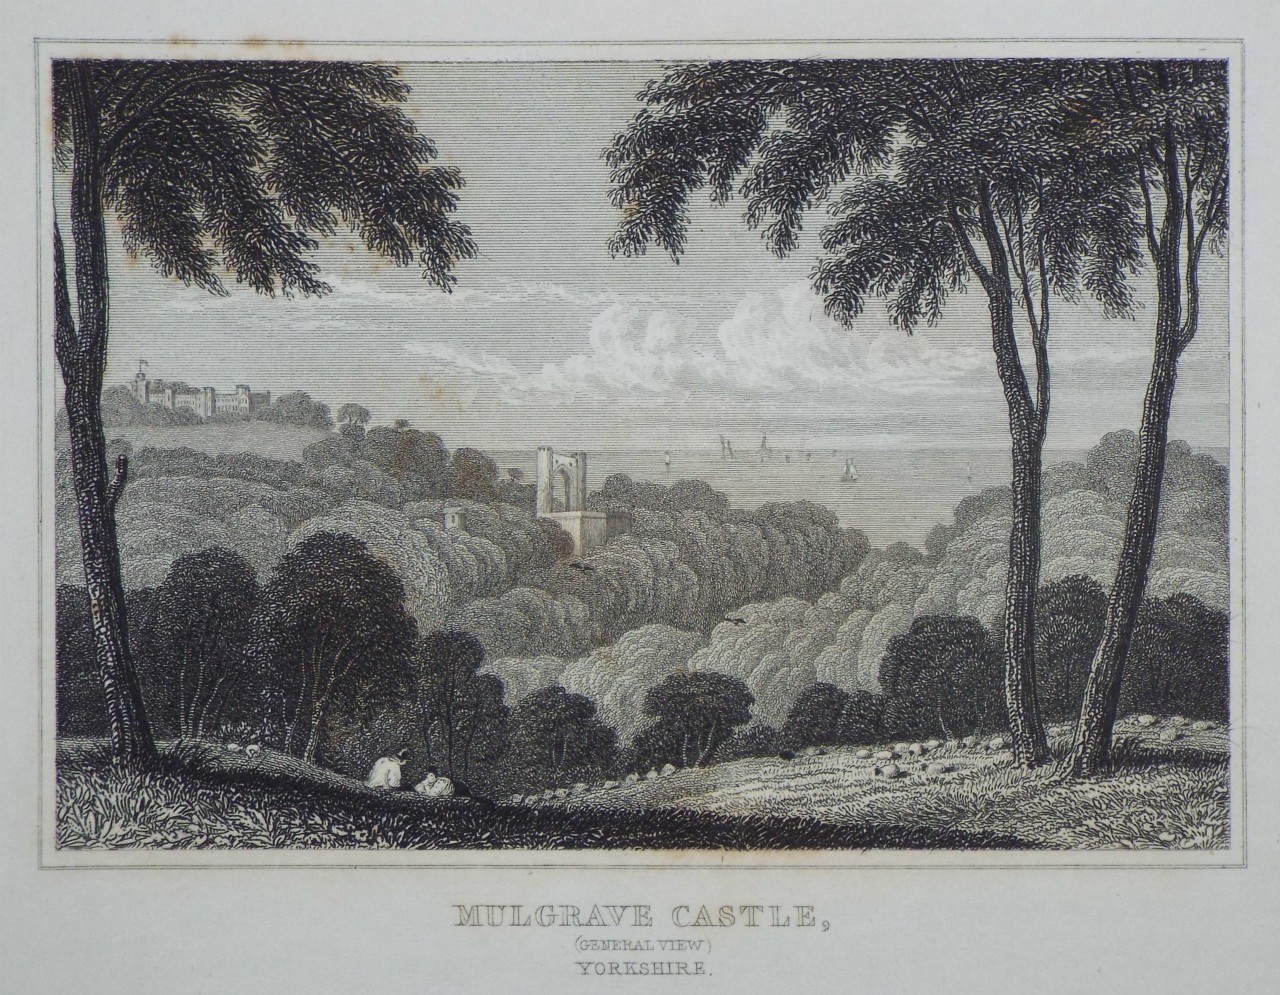 Print - Mulgrave Castle, (General View) Yorkshire. - Radclyffe